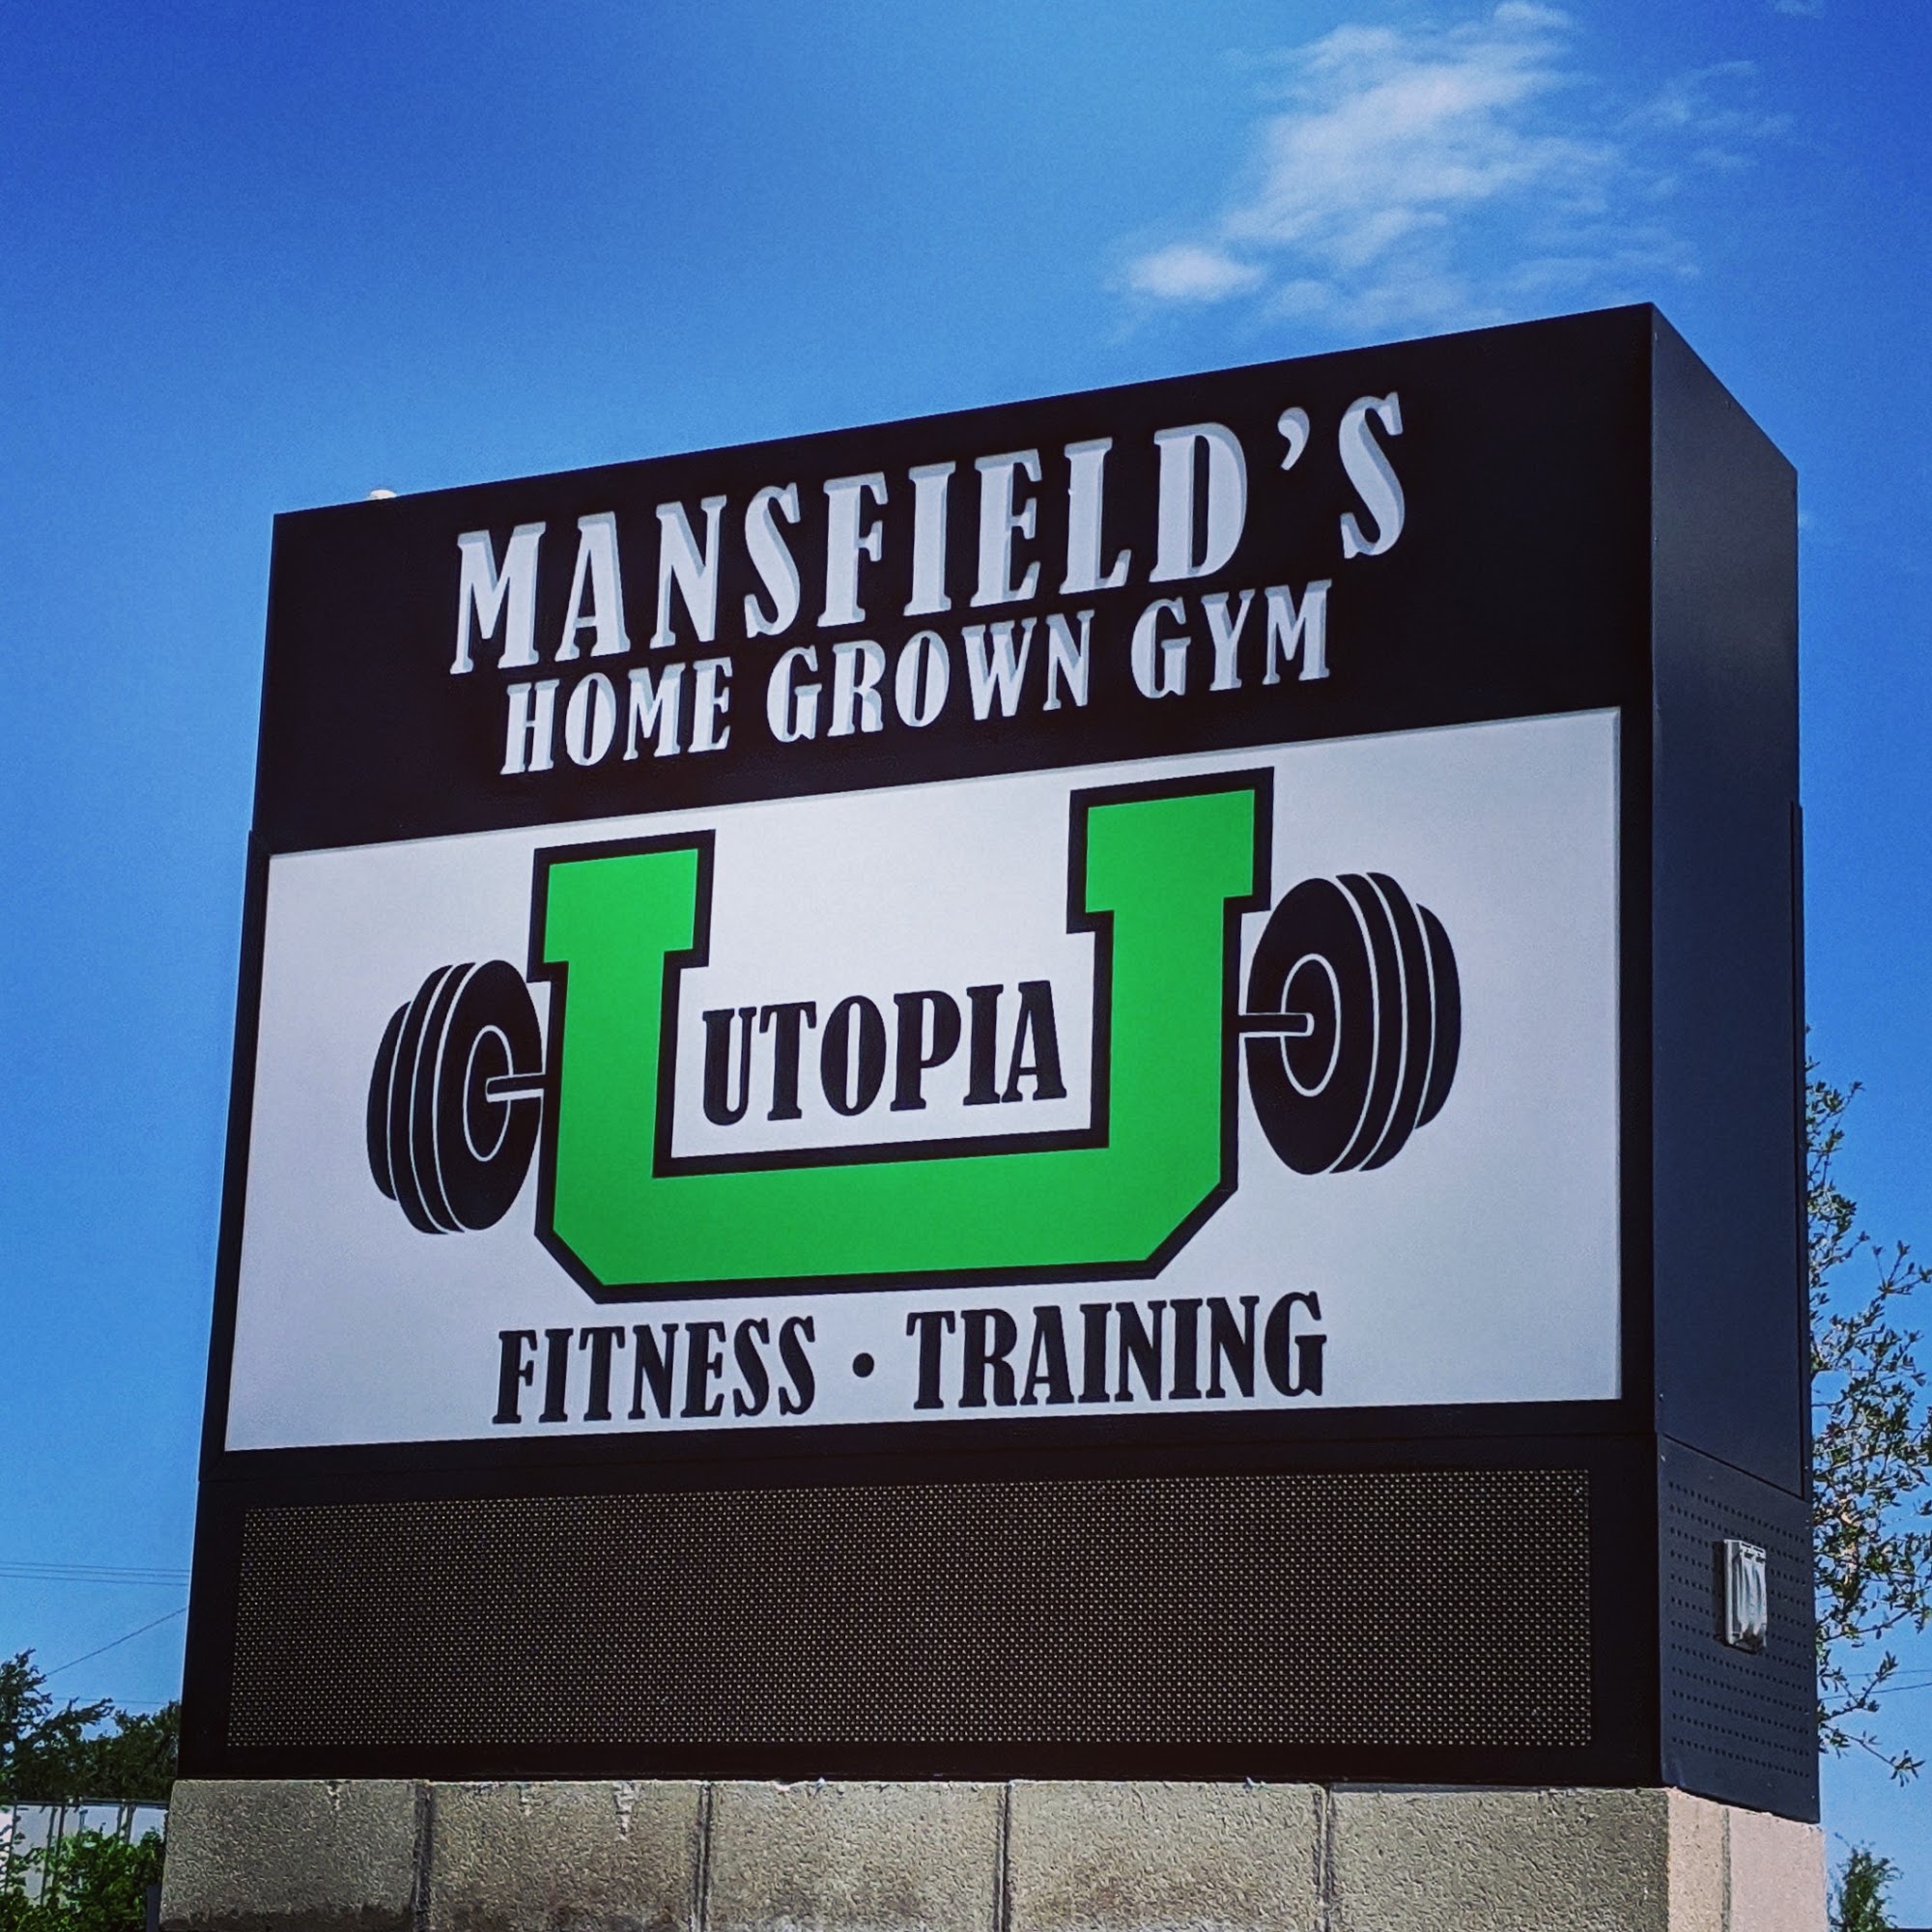 Utopia Fitness & Training